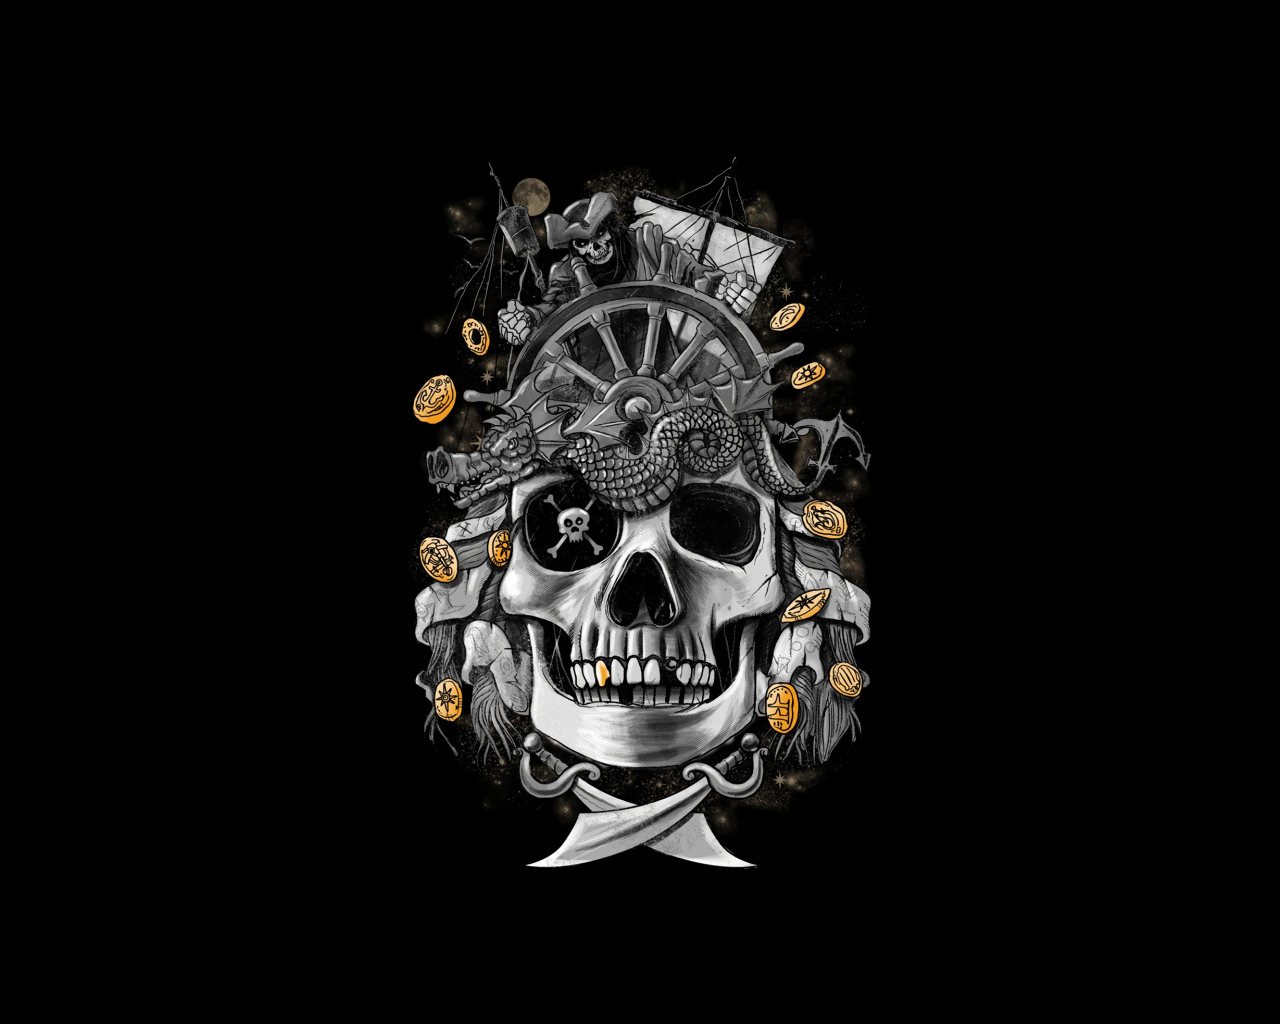 Пиратский череп с монетами на черном фоне